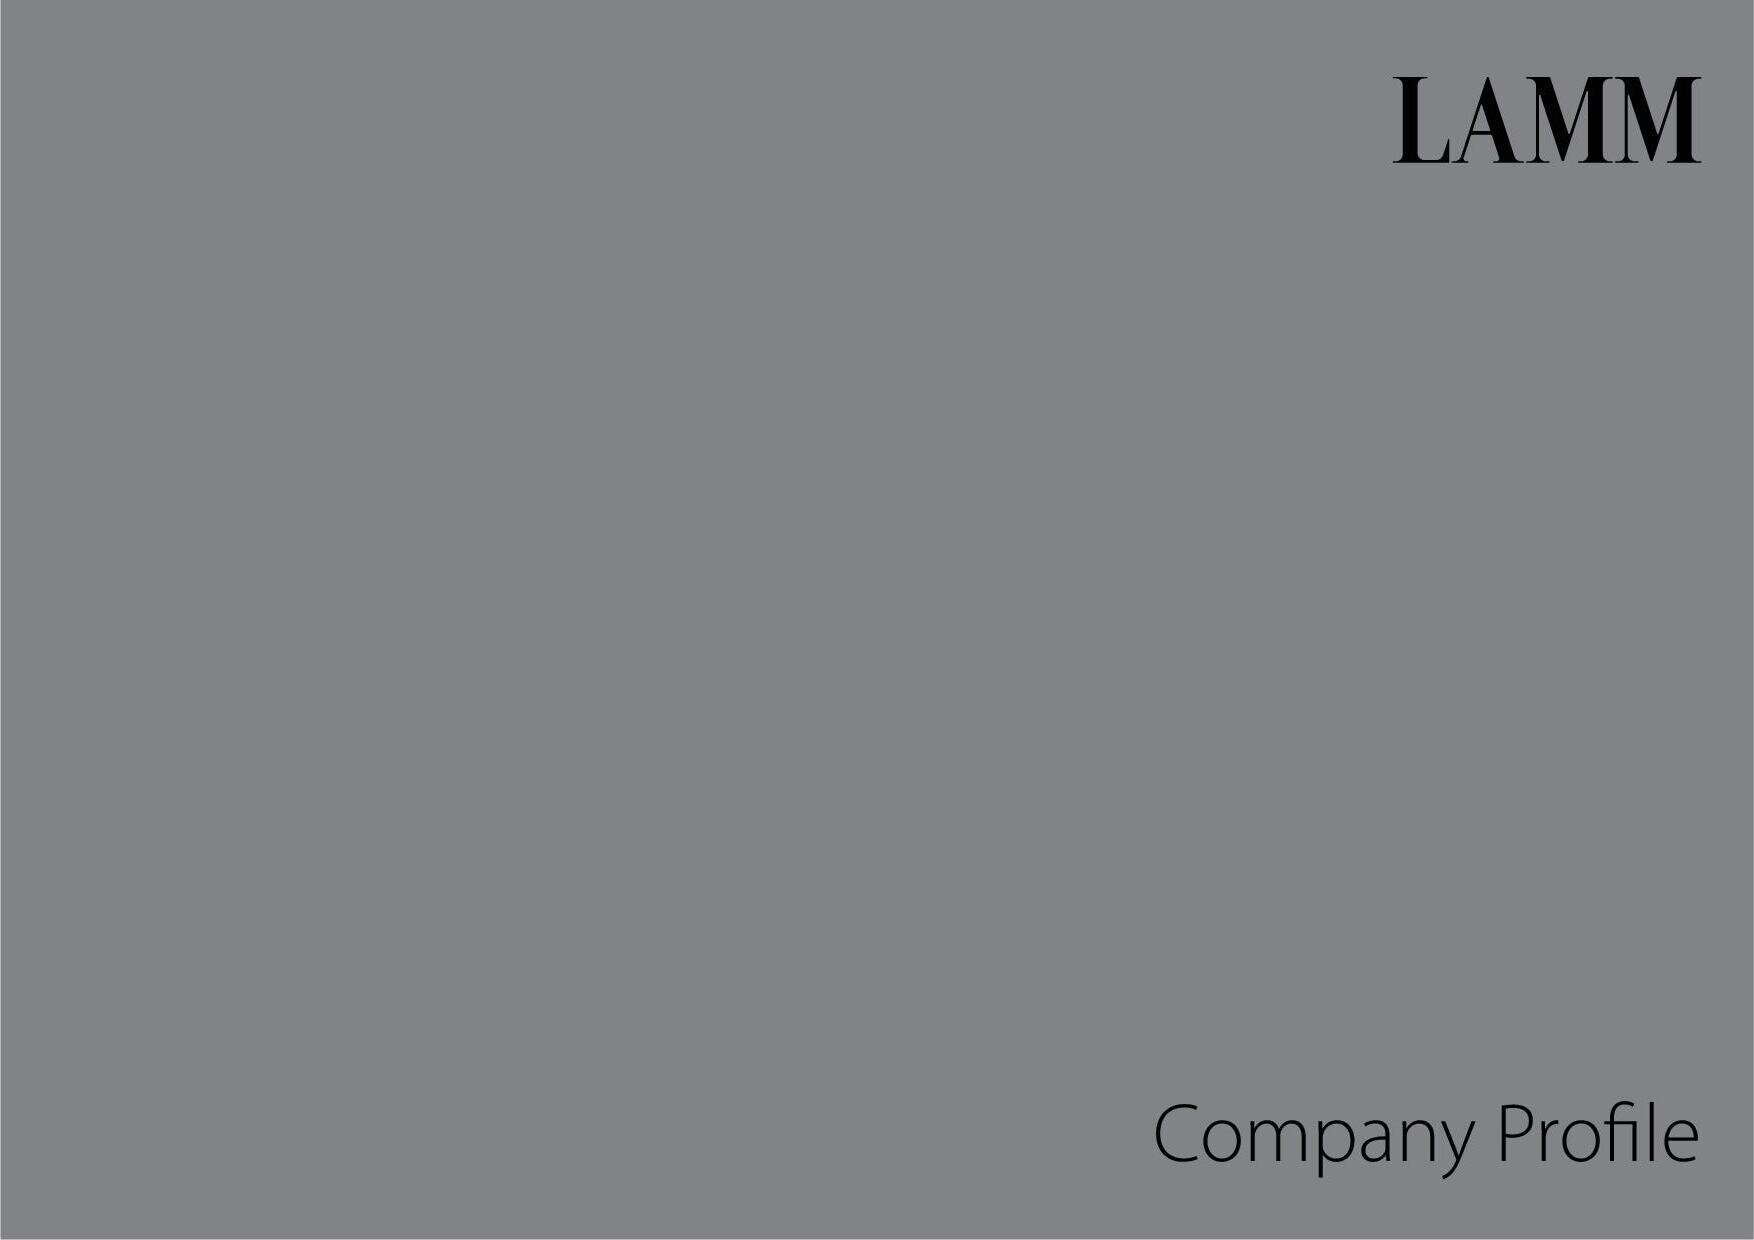 Lamm company profil